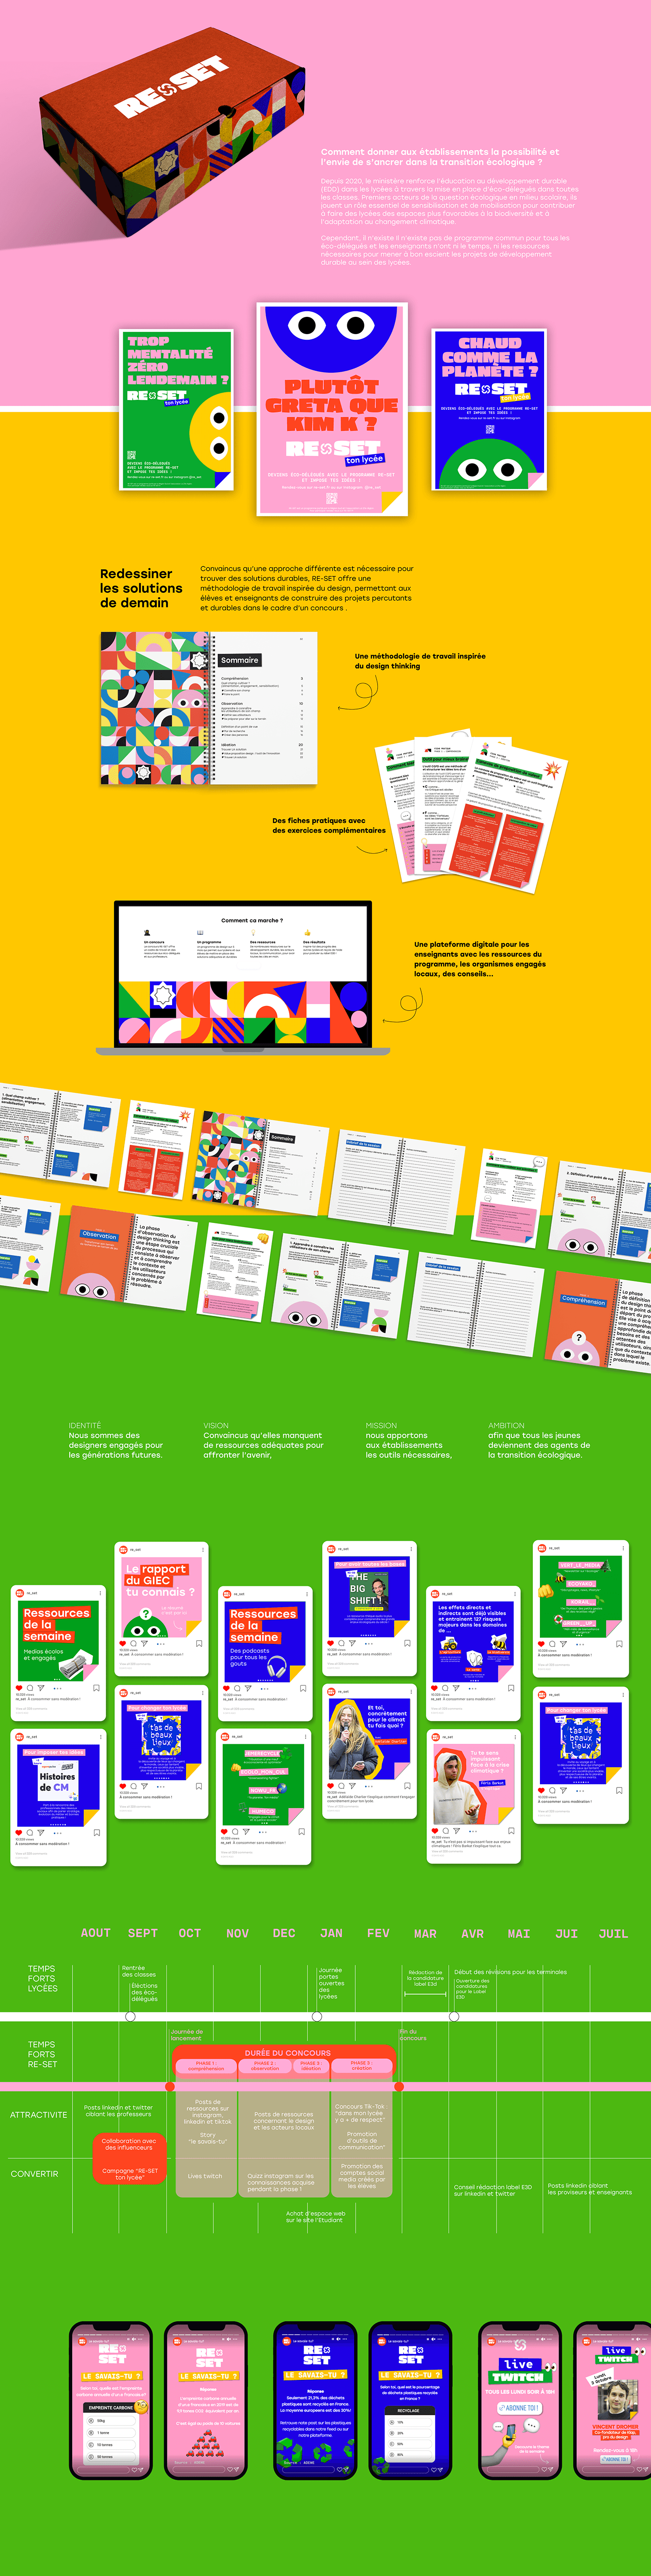 Sustainability ecodesign design thinking school graphic design  branding  system design user experience